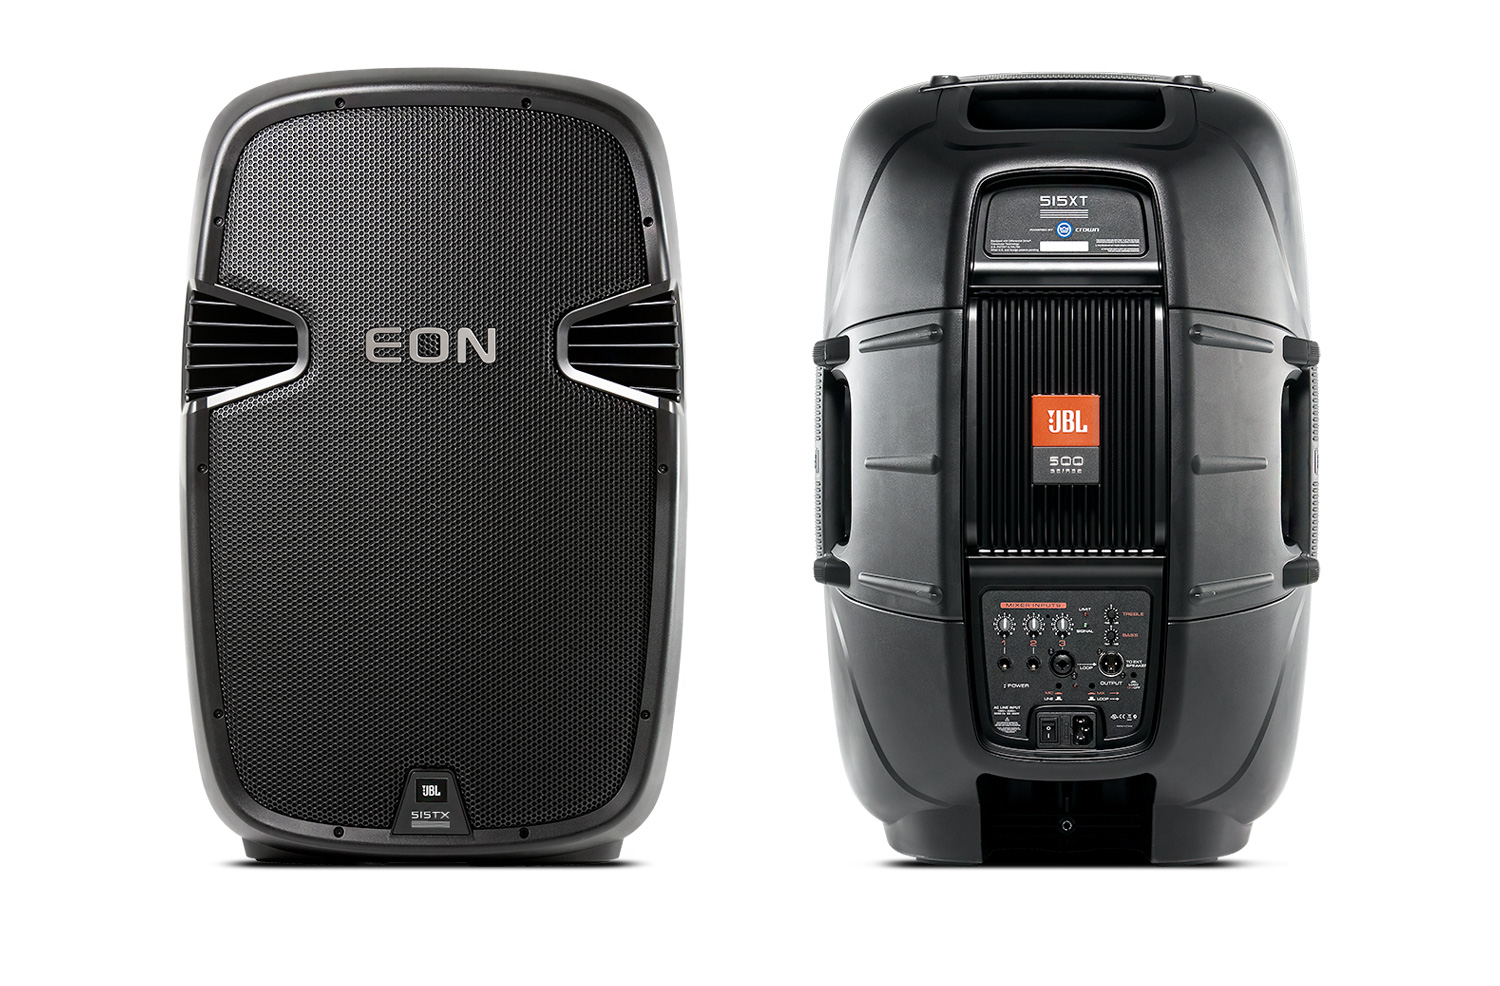 EON515XT | JBL Professional Loudspeakers